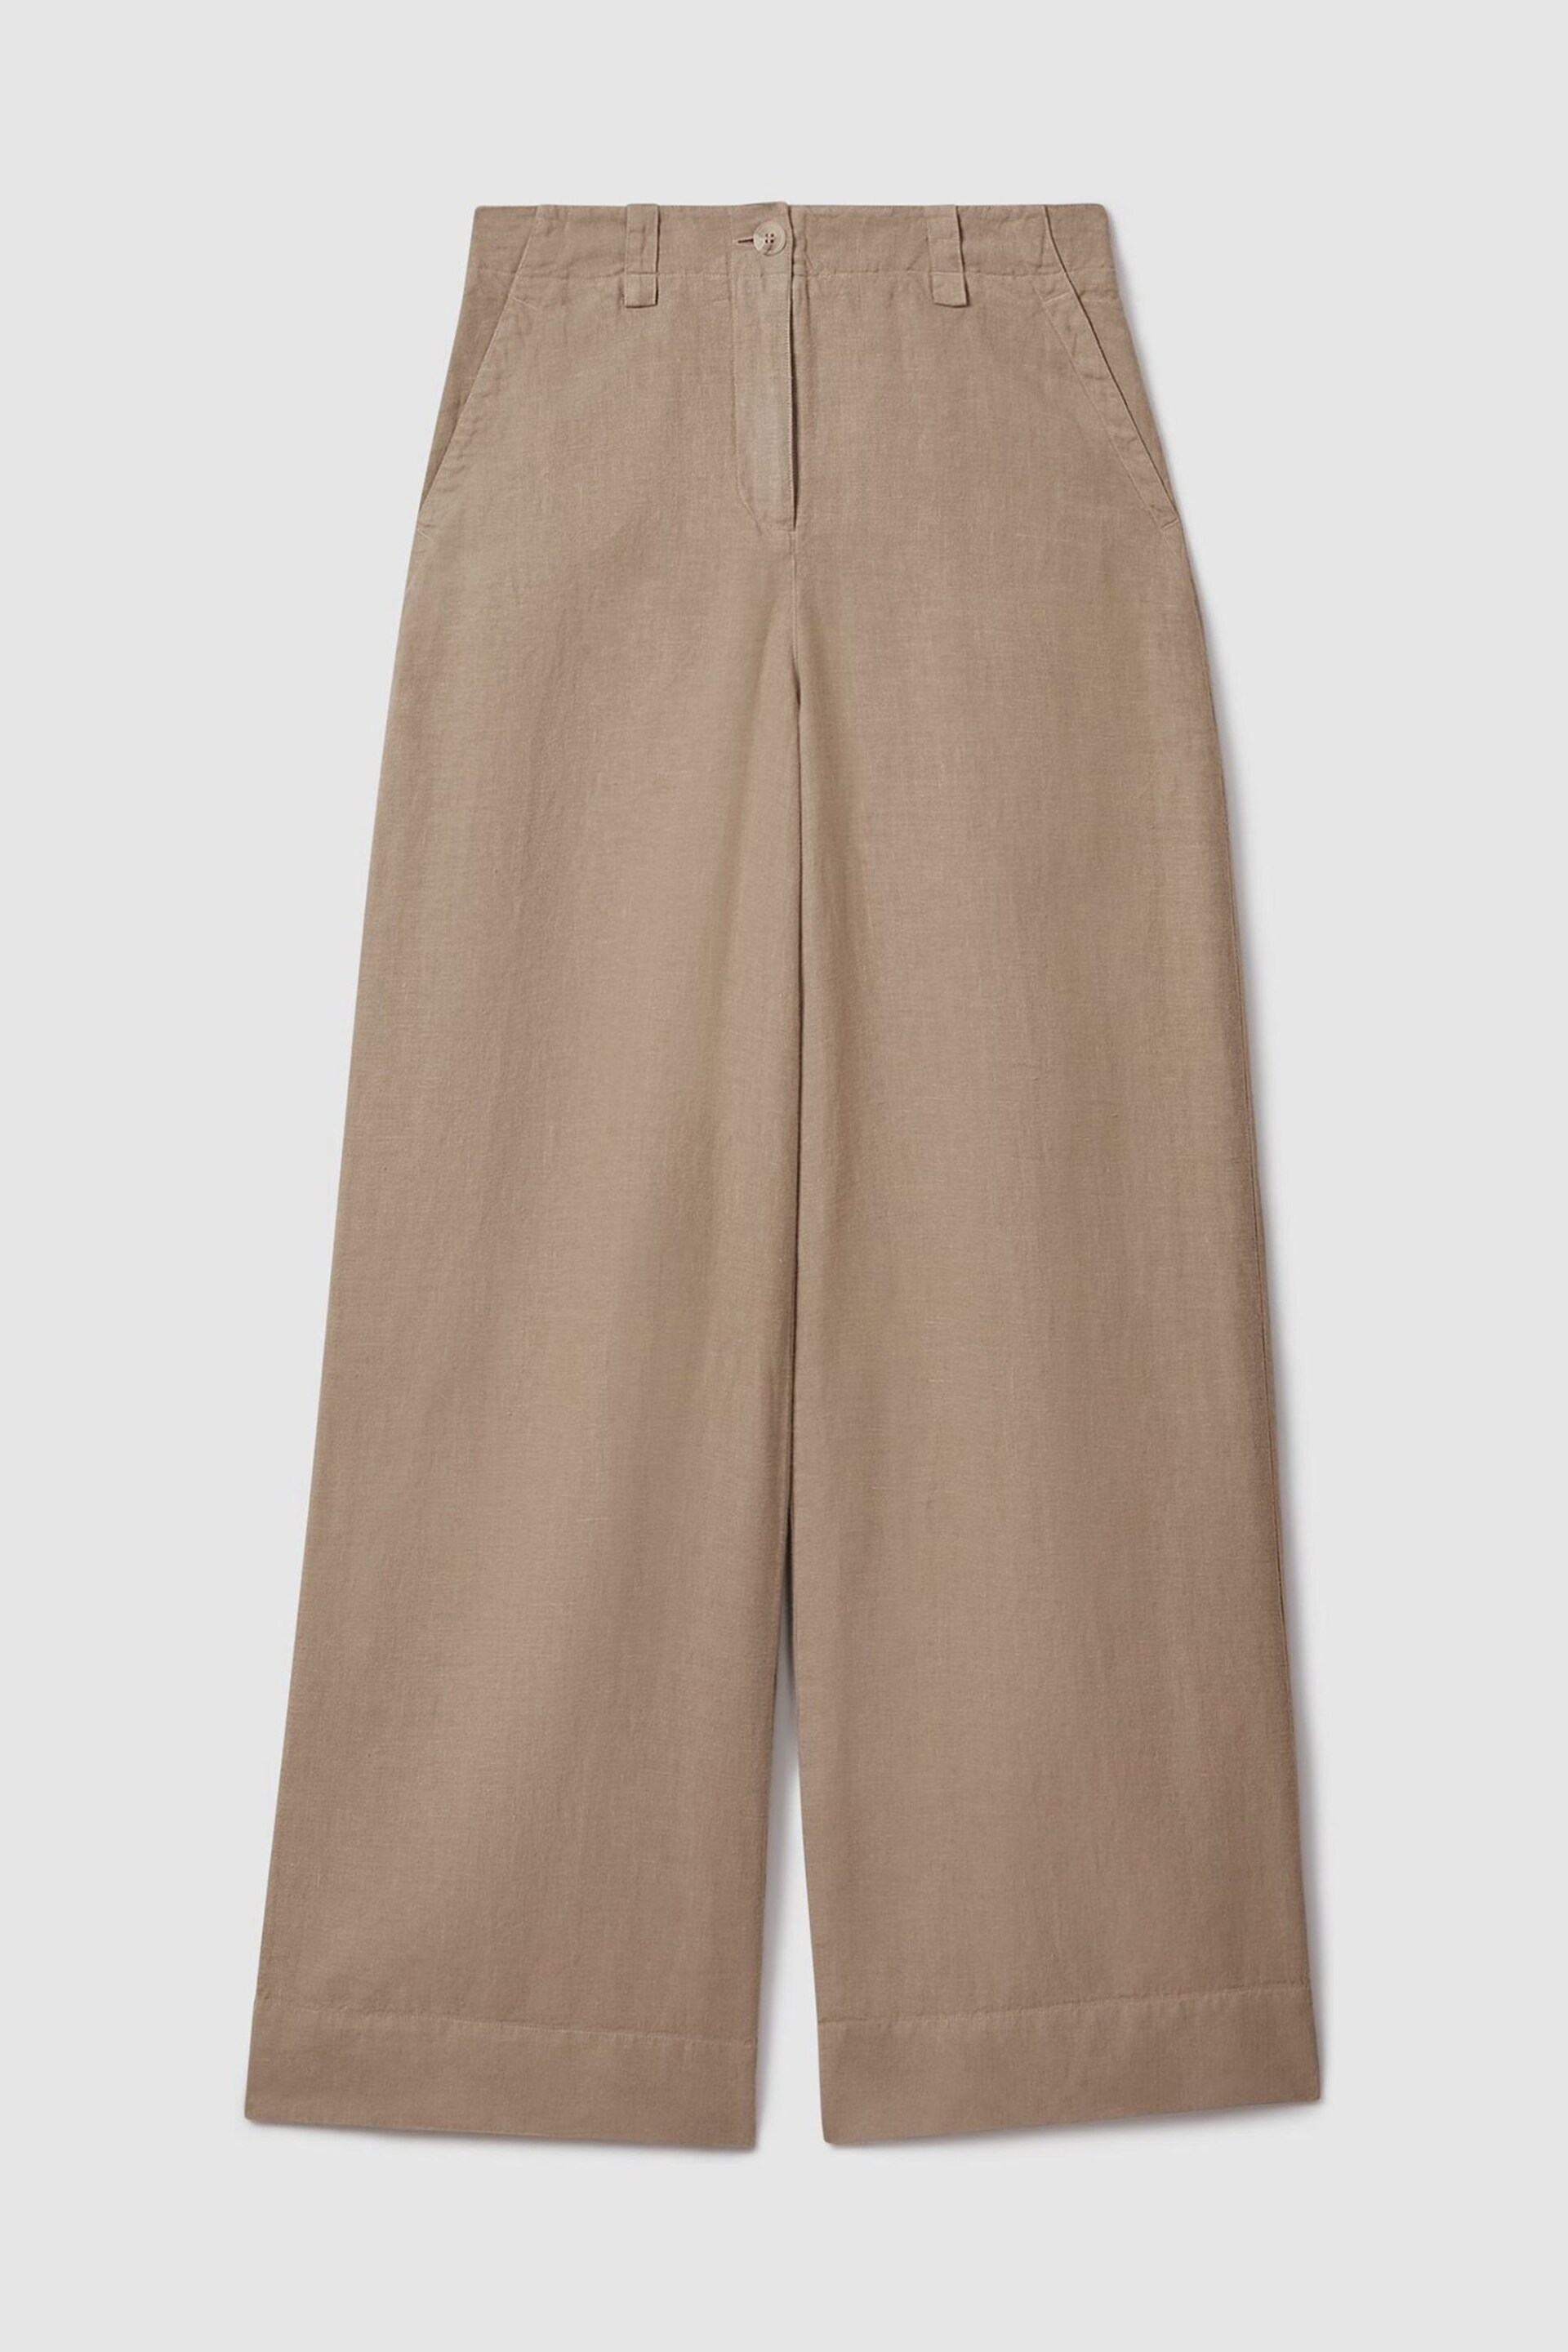 Reiss Mink Neutral Demi Petite Linen Wide Leg Garment Dyed Trousers - Image 2 of 7